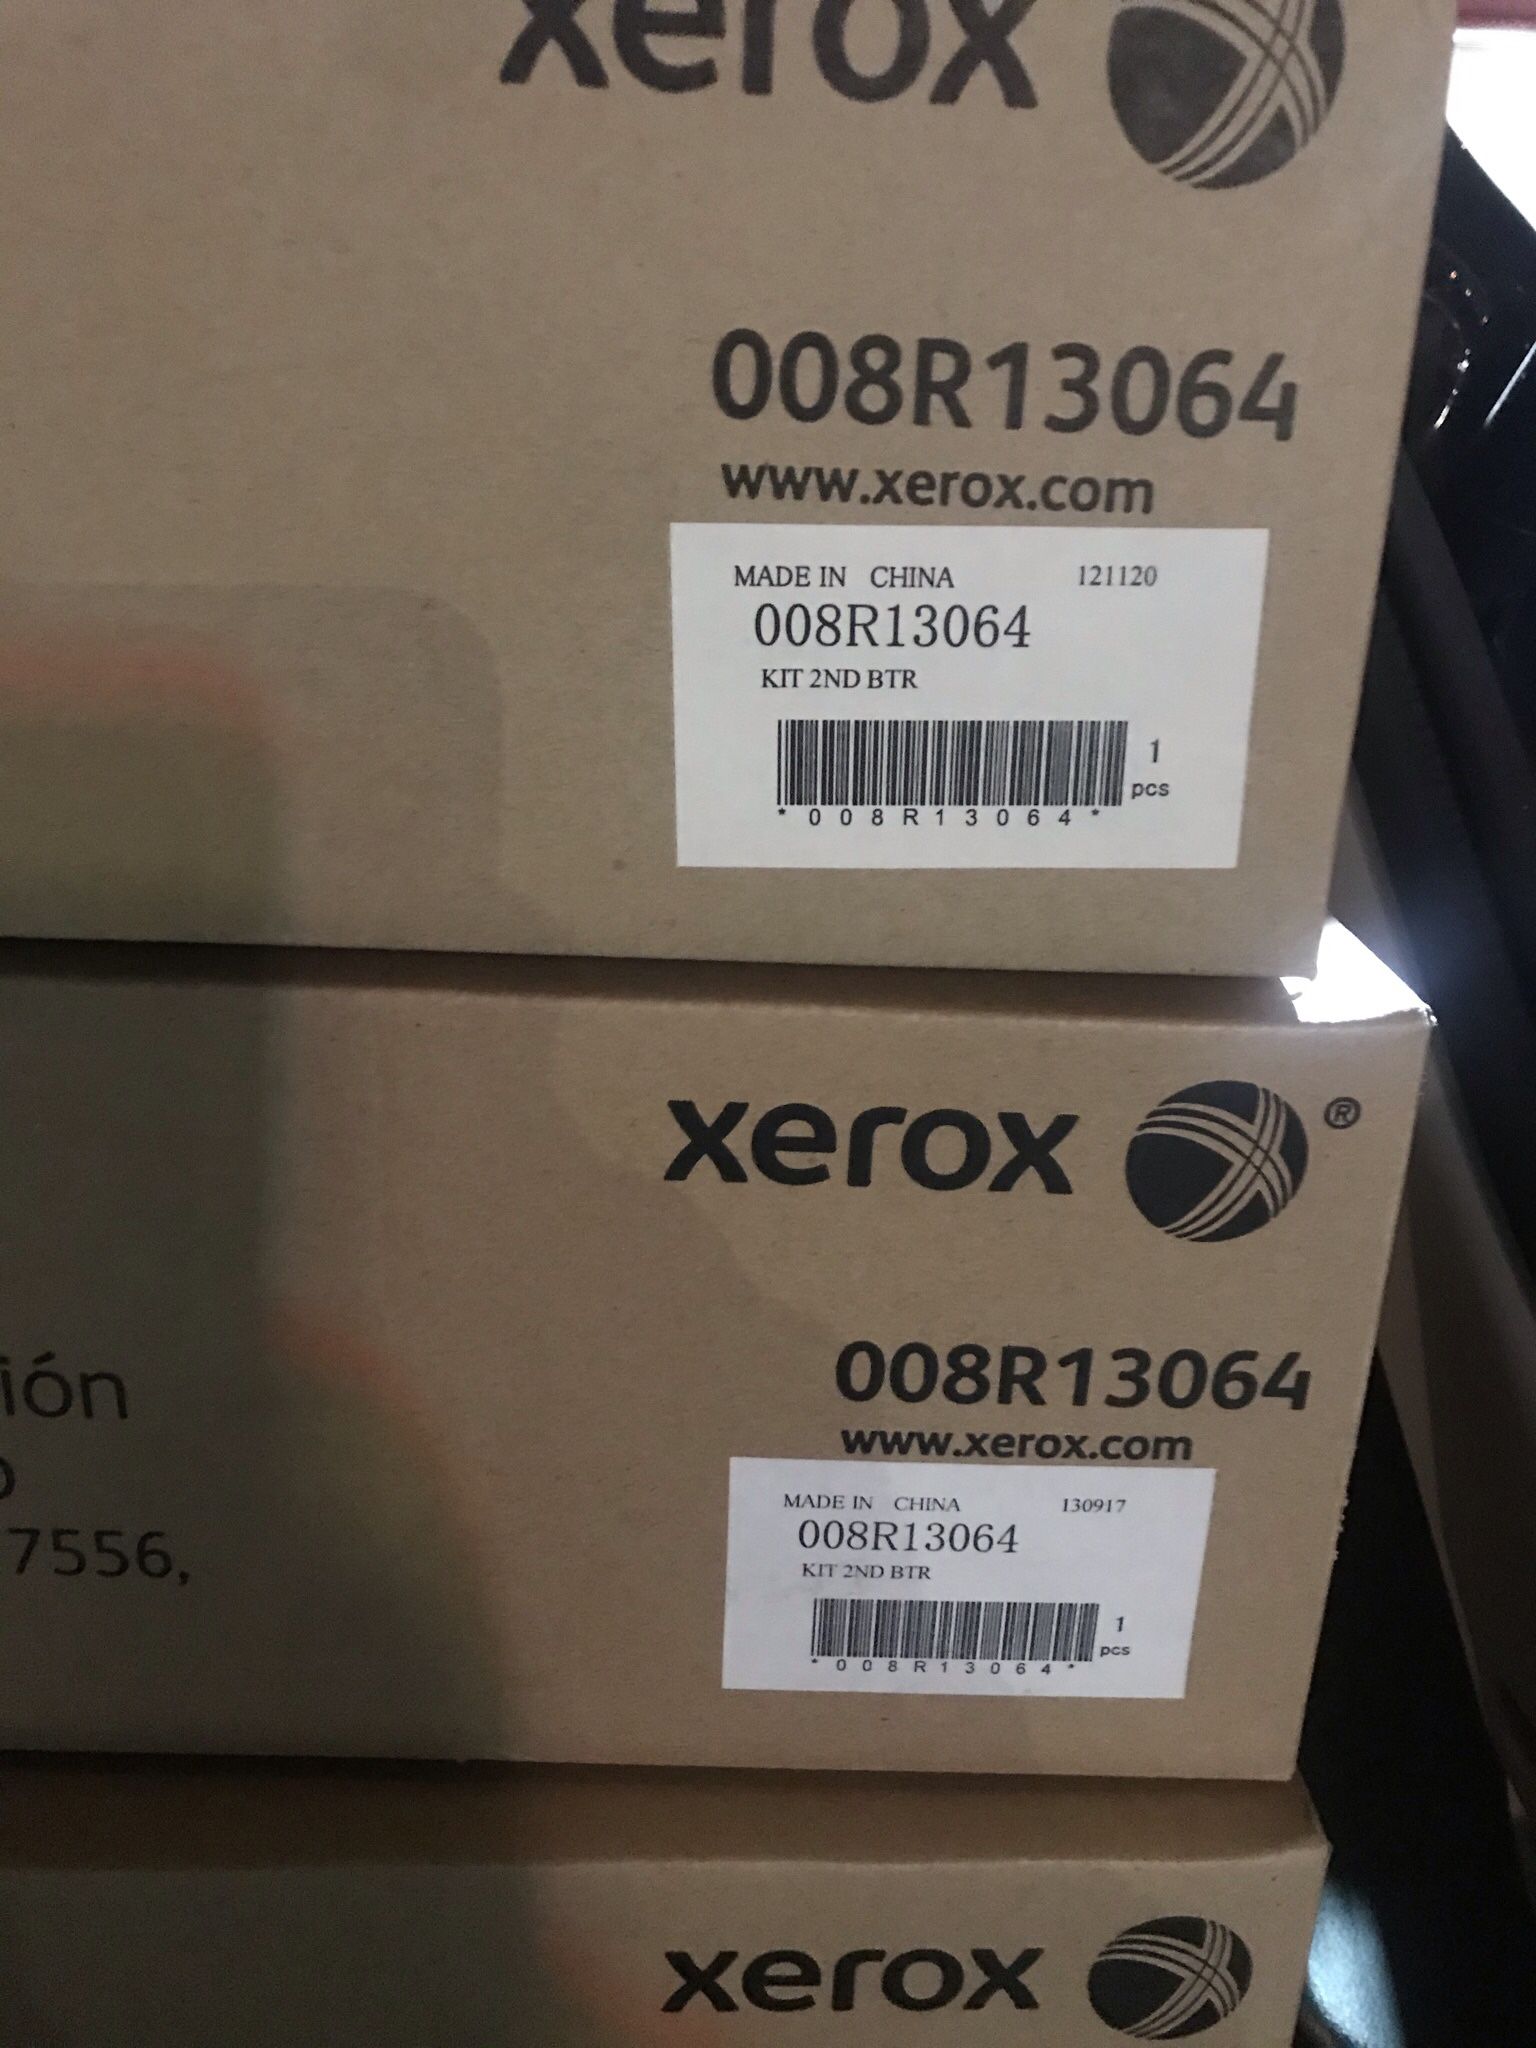 4 Xerox Ink Toners And 1 Epson Maintenance Cartridge 